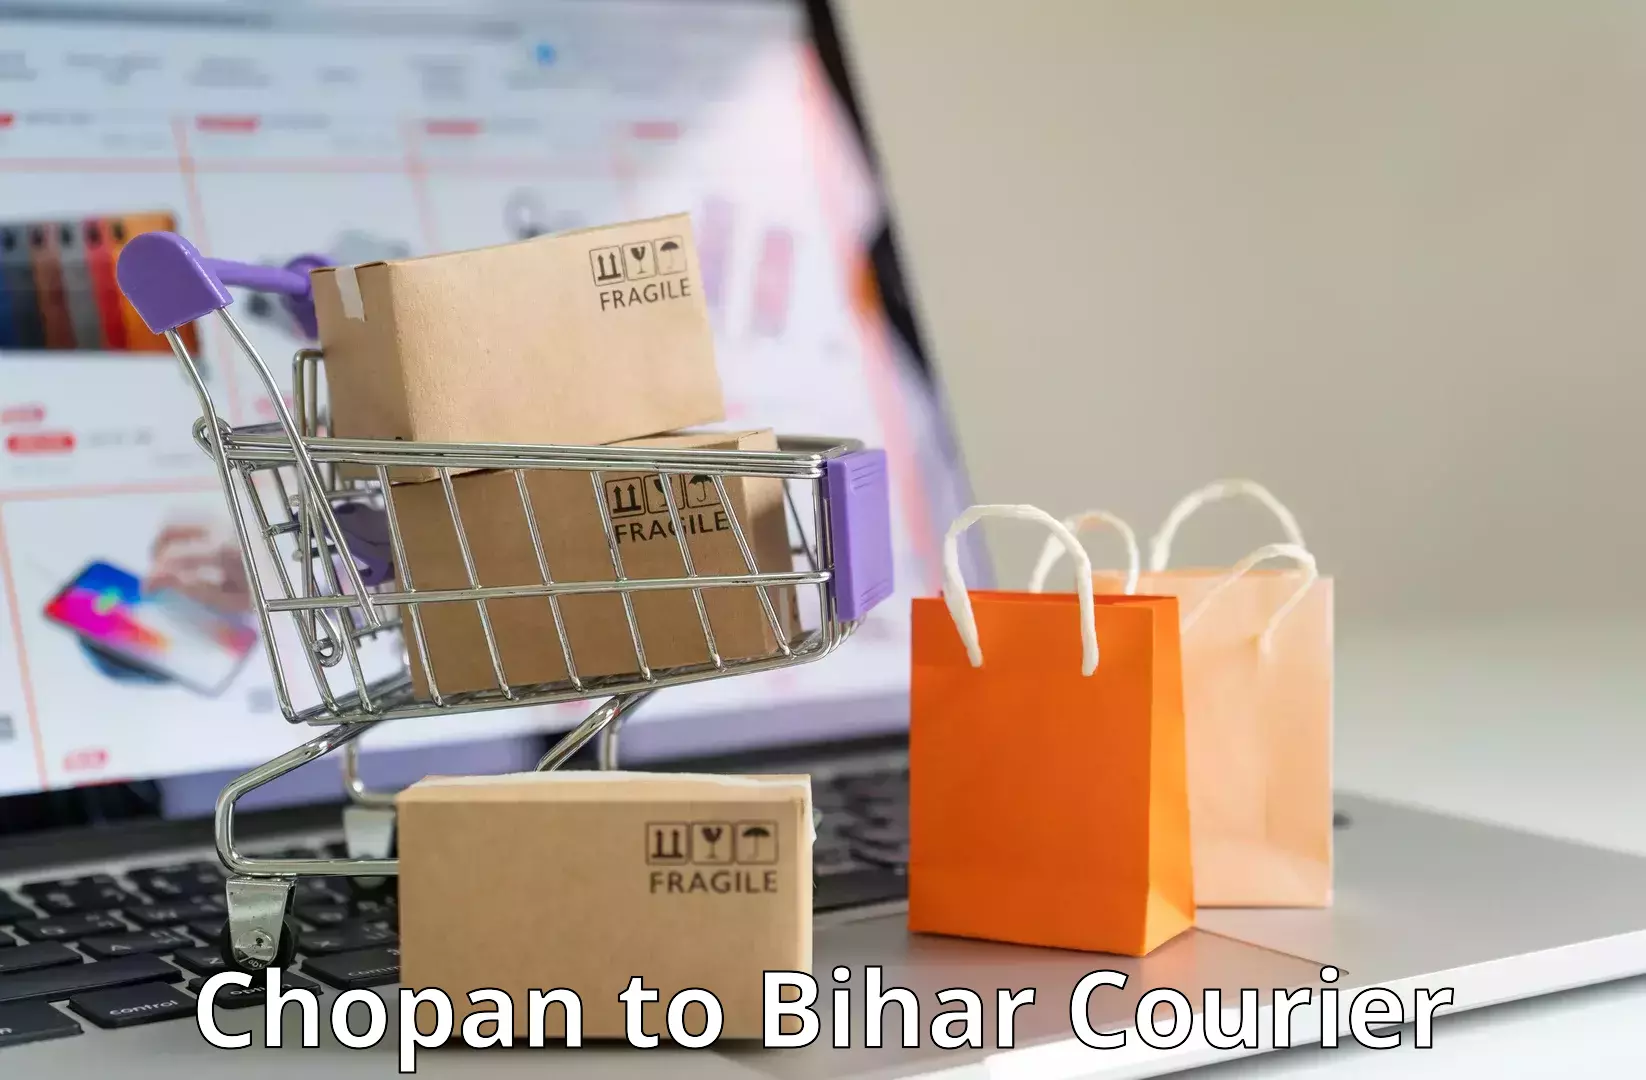 Courier service comparison Chopan to Gopalganj